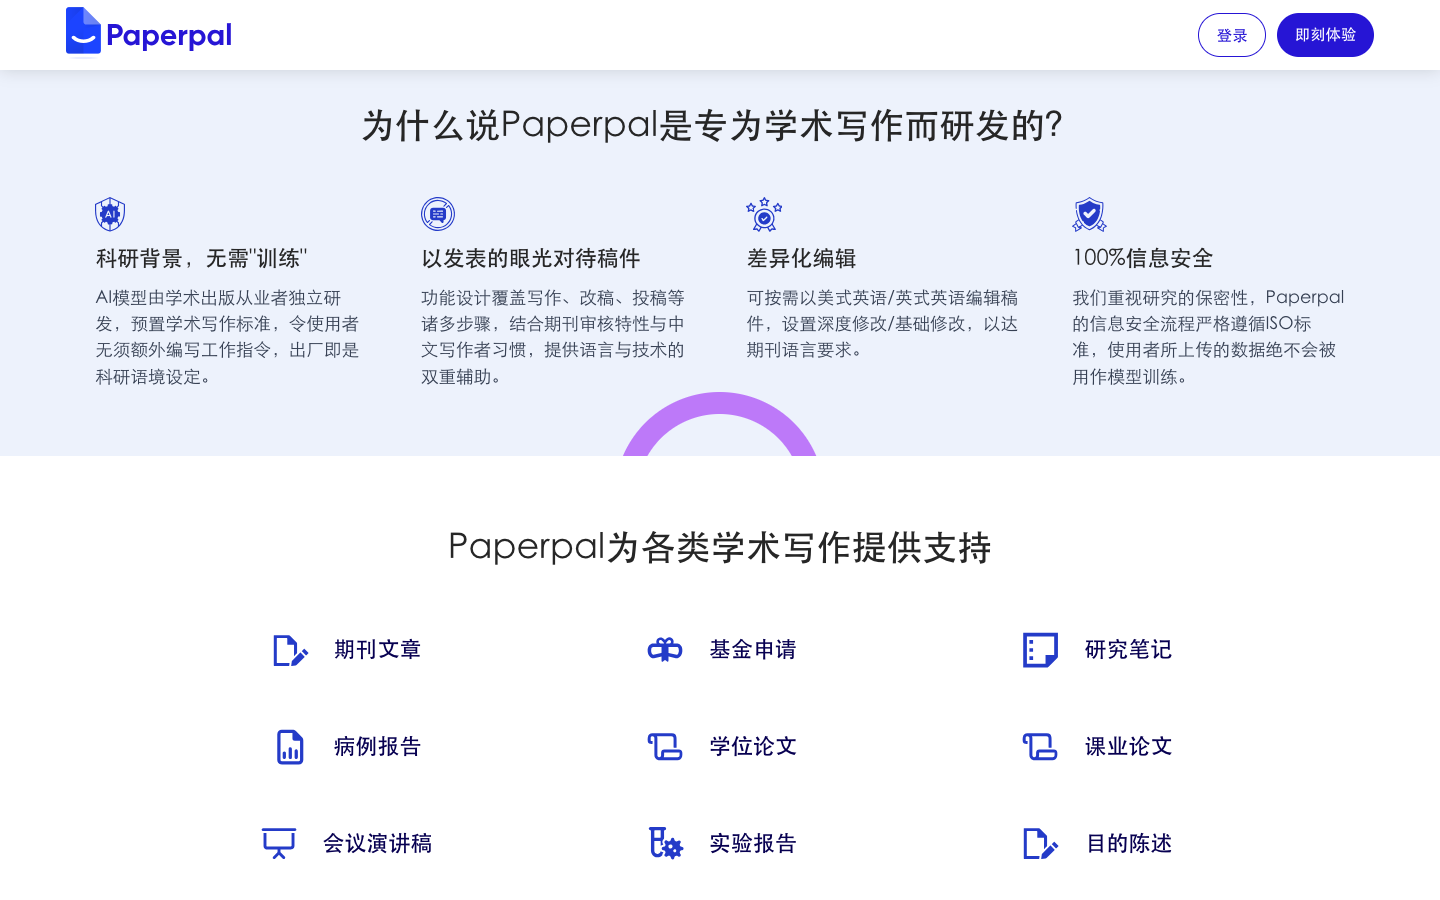 Paperpal AI论文润色与检测